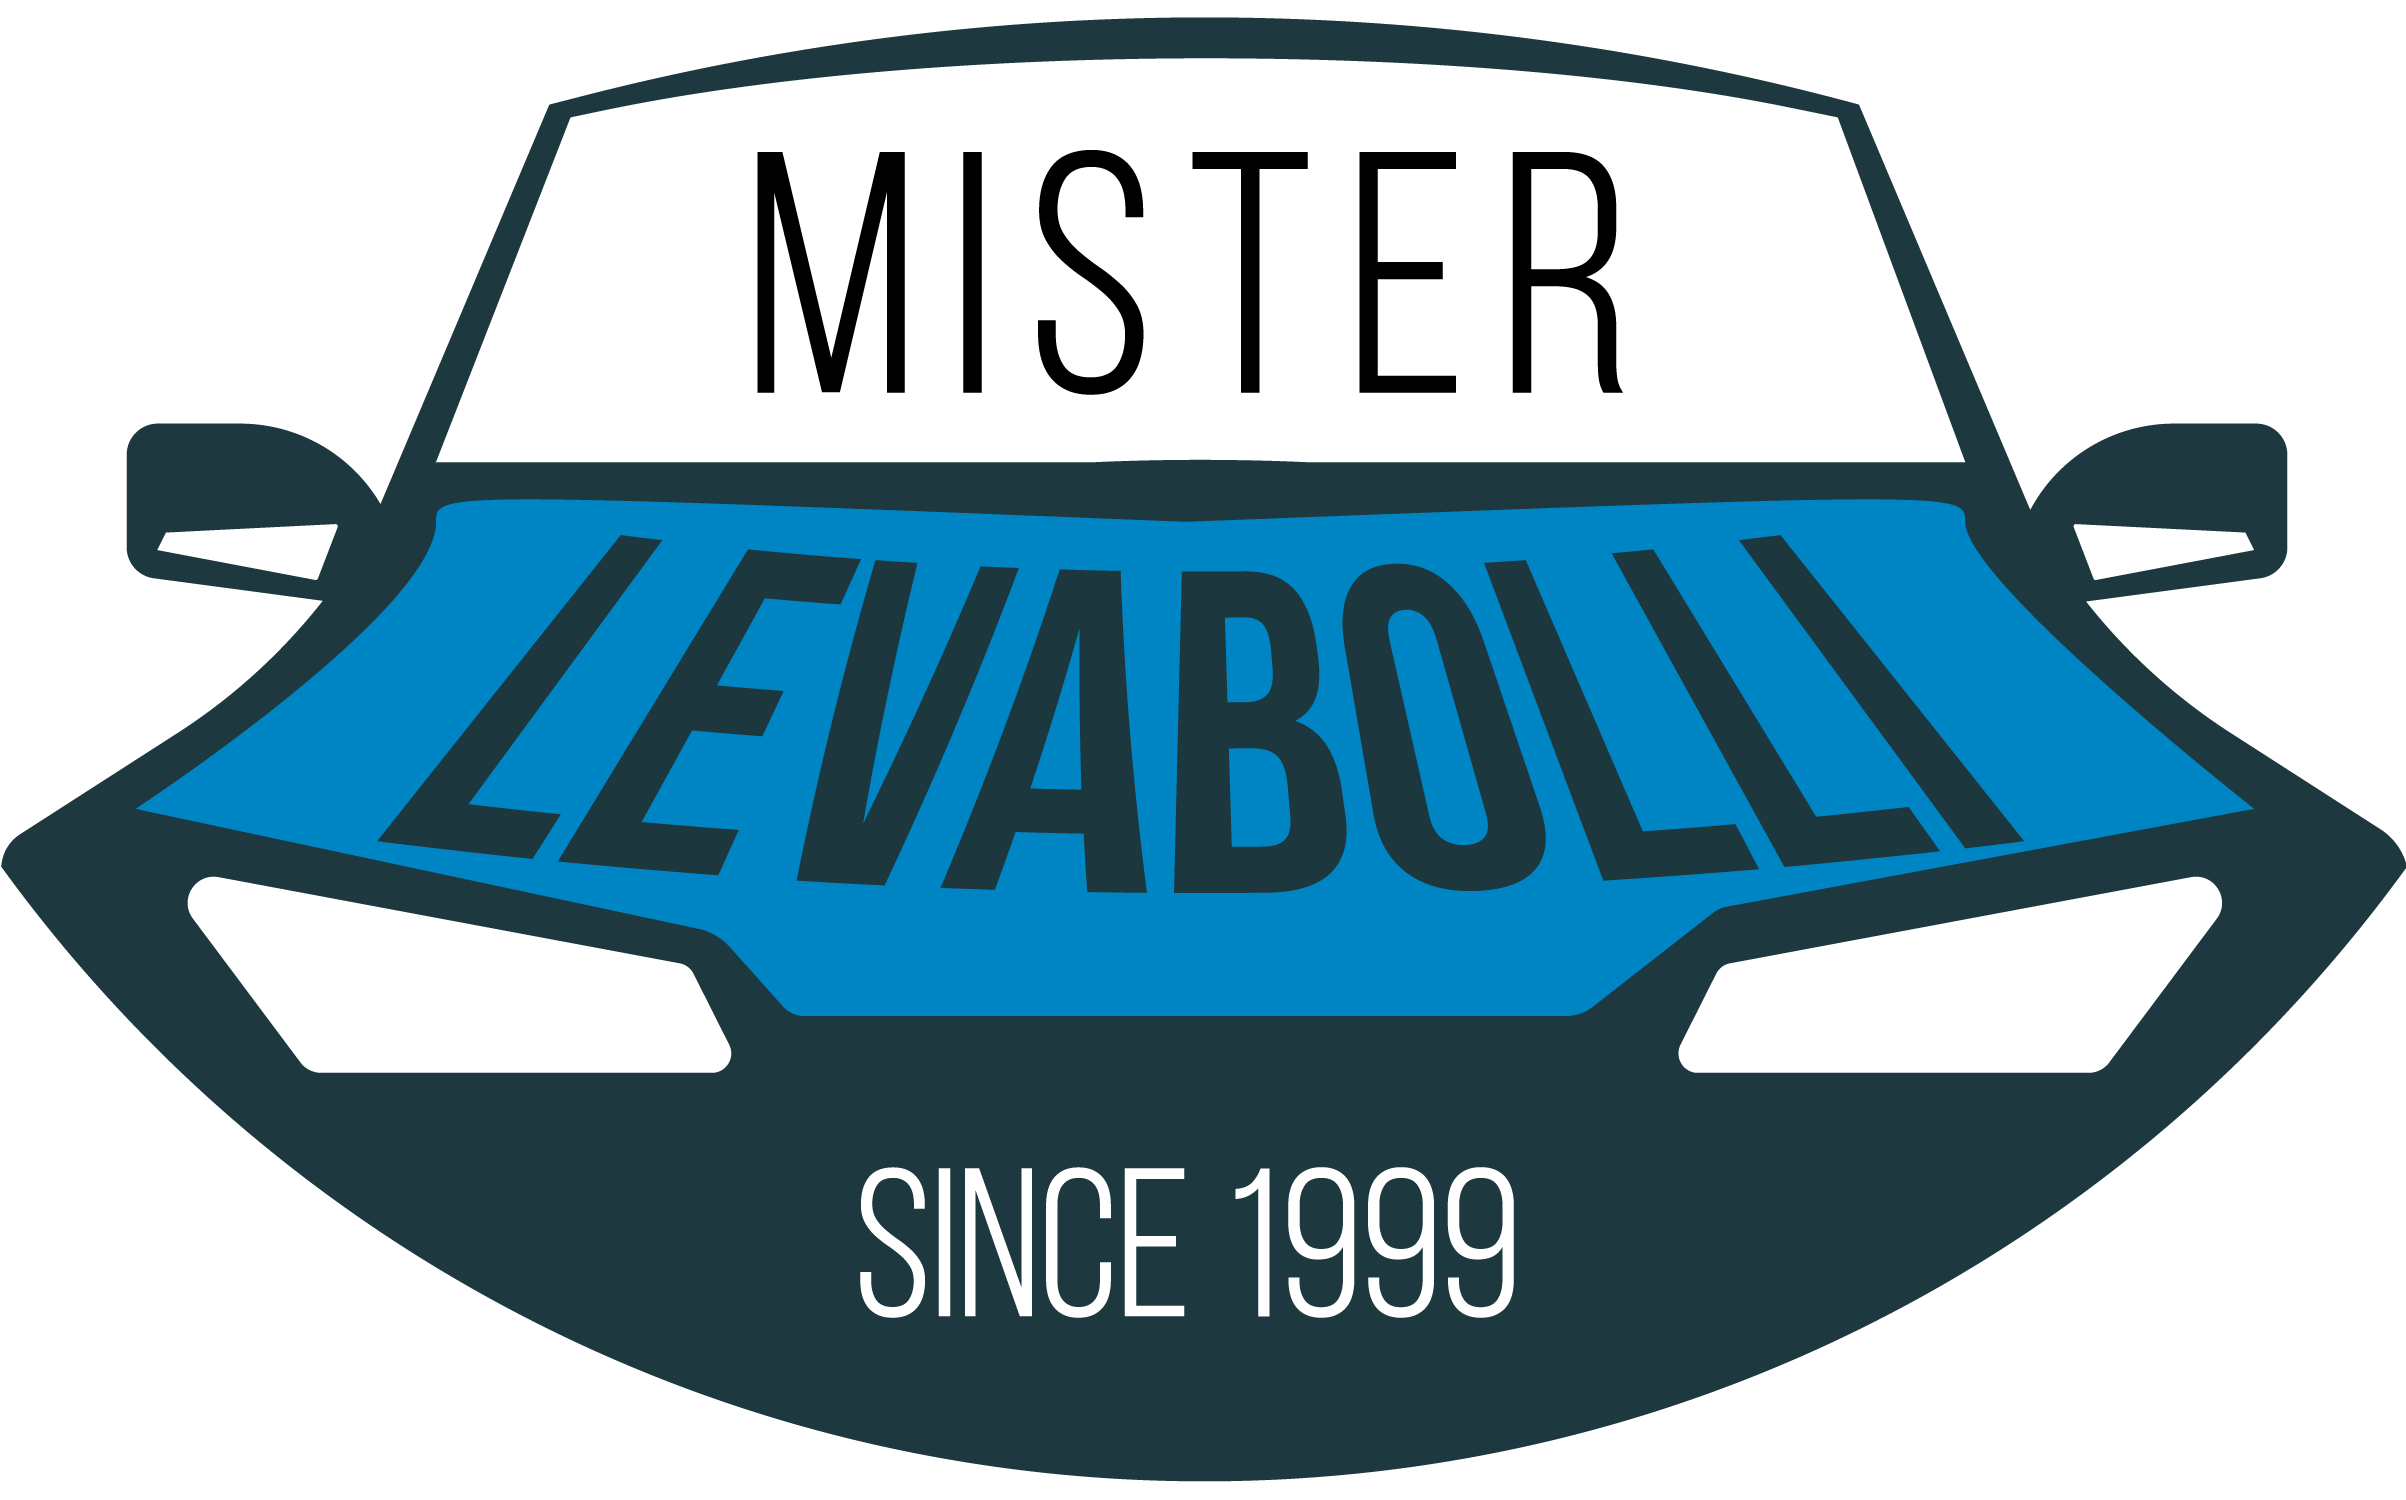 Mister Levabolli